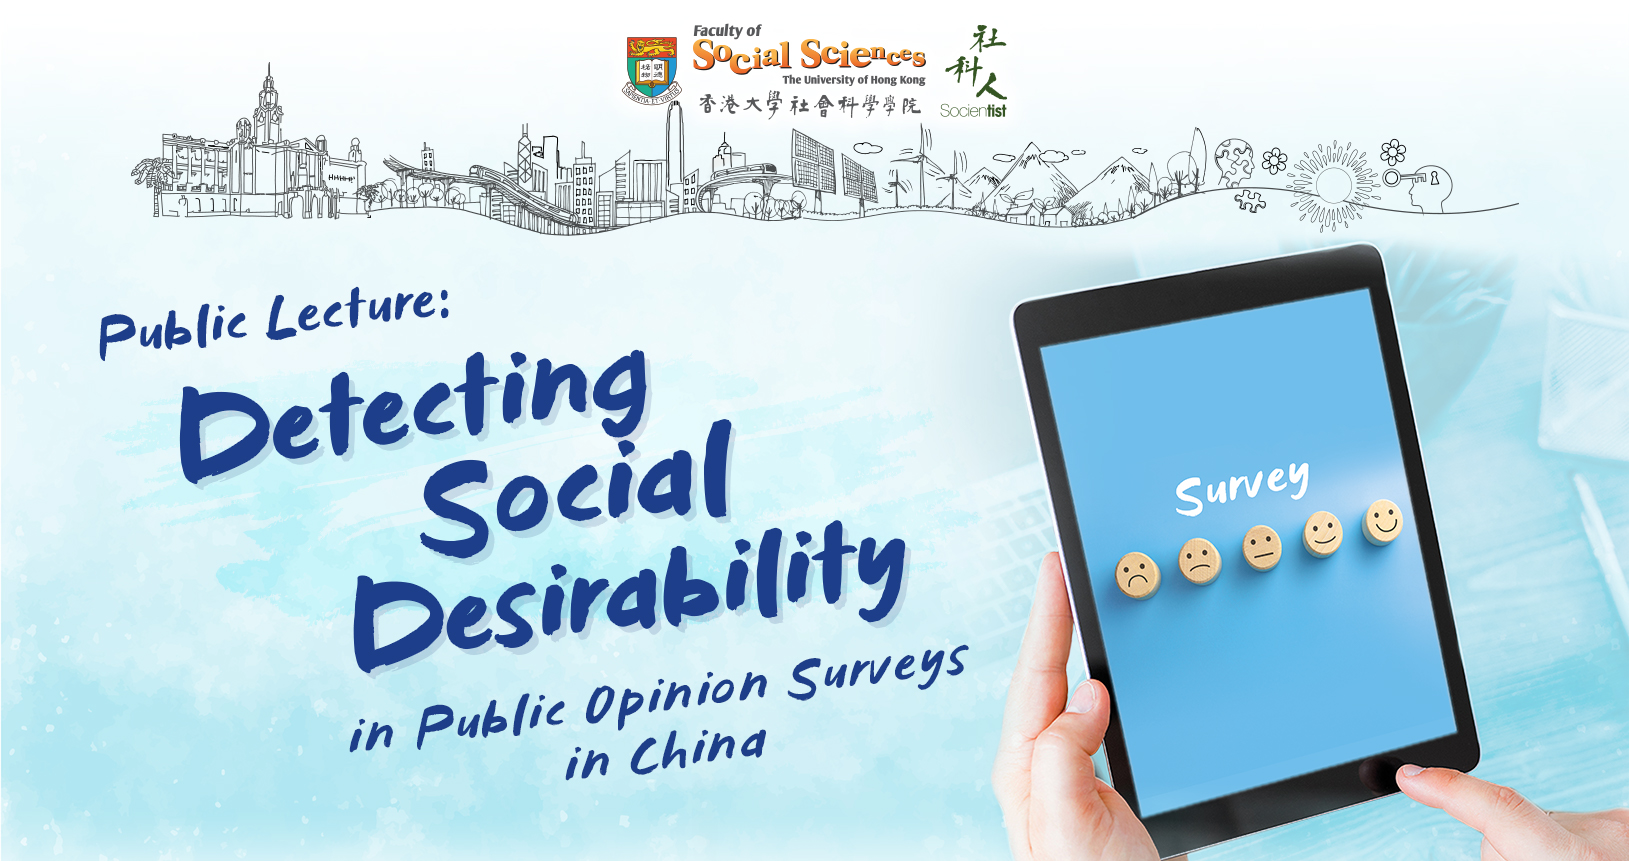 Detecting social desirabilty in public opinion surveys in China